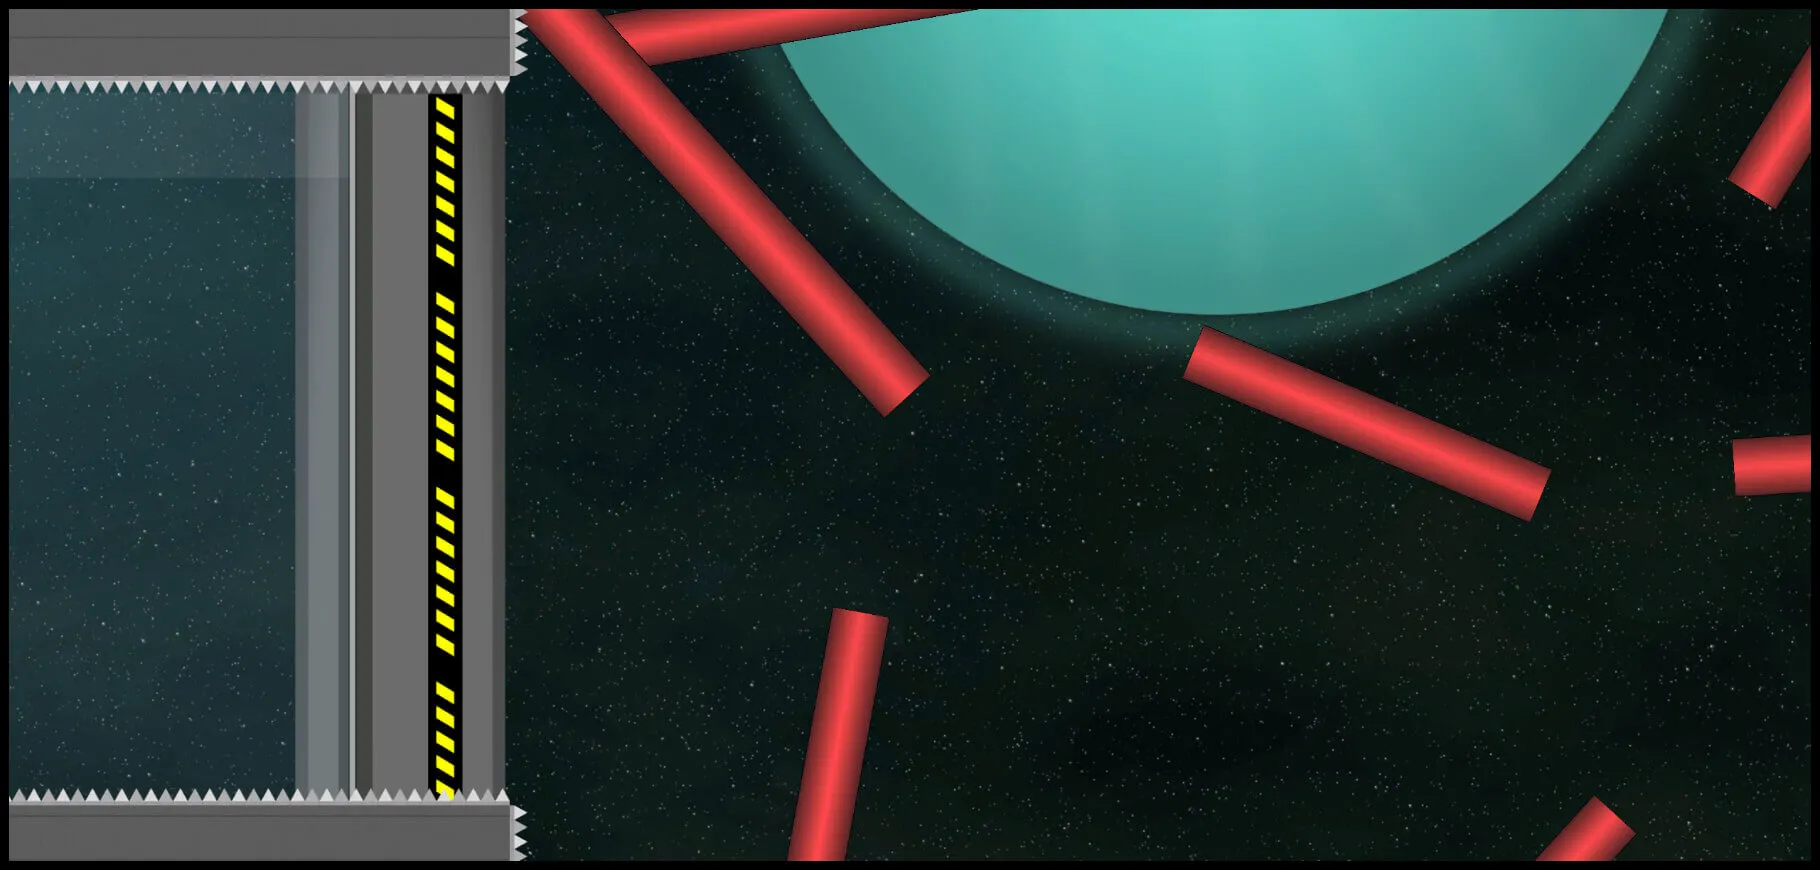 interstellar level screenshot from the game reflex runner.